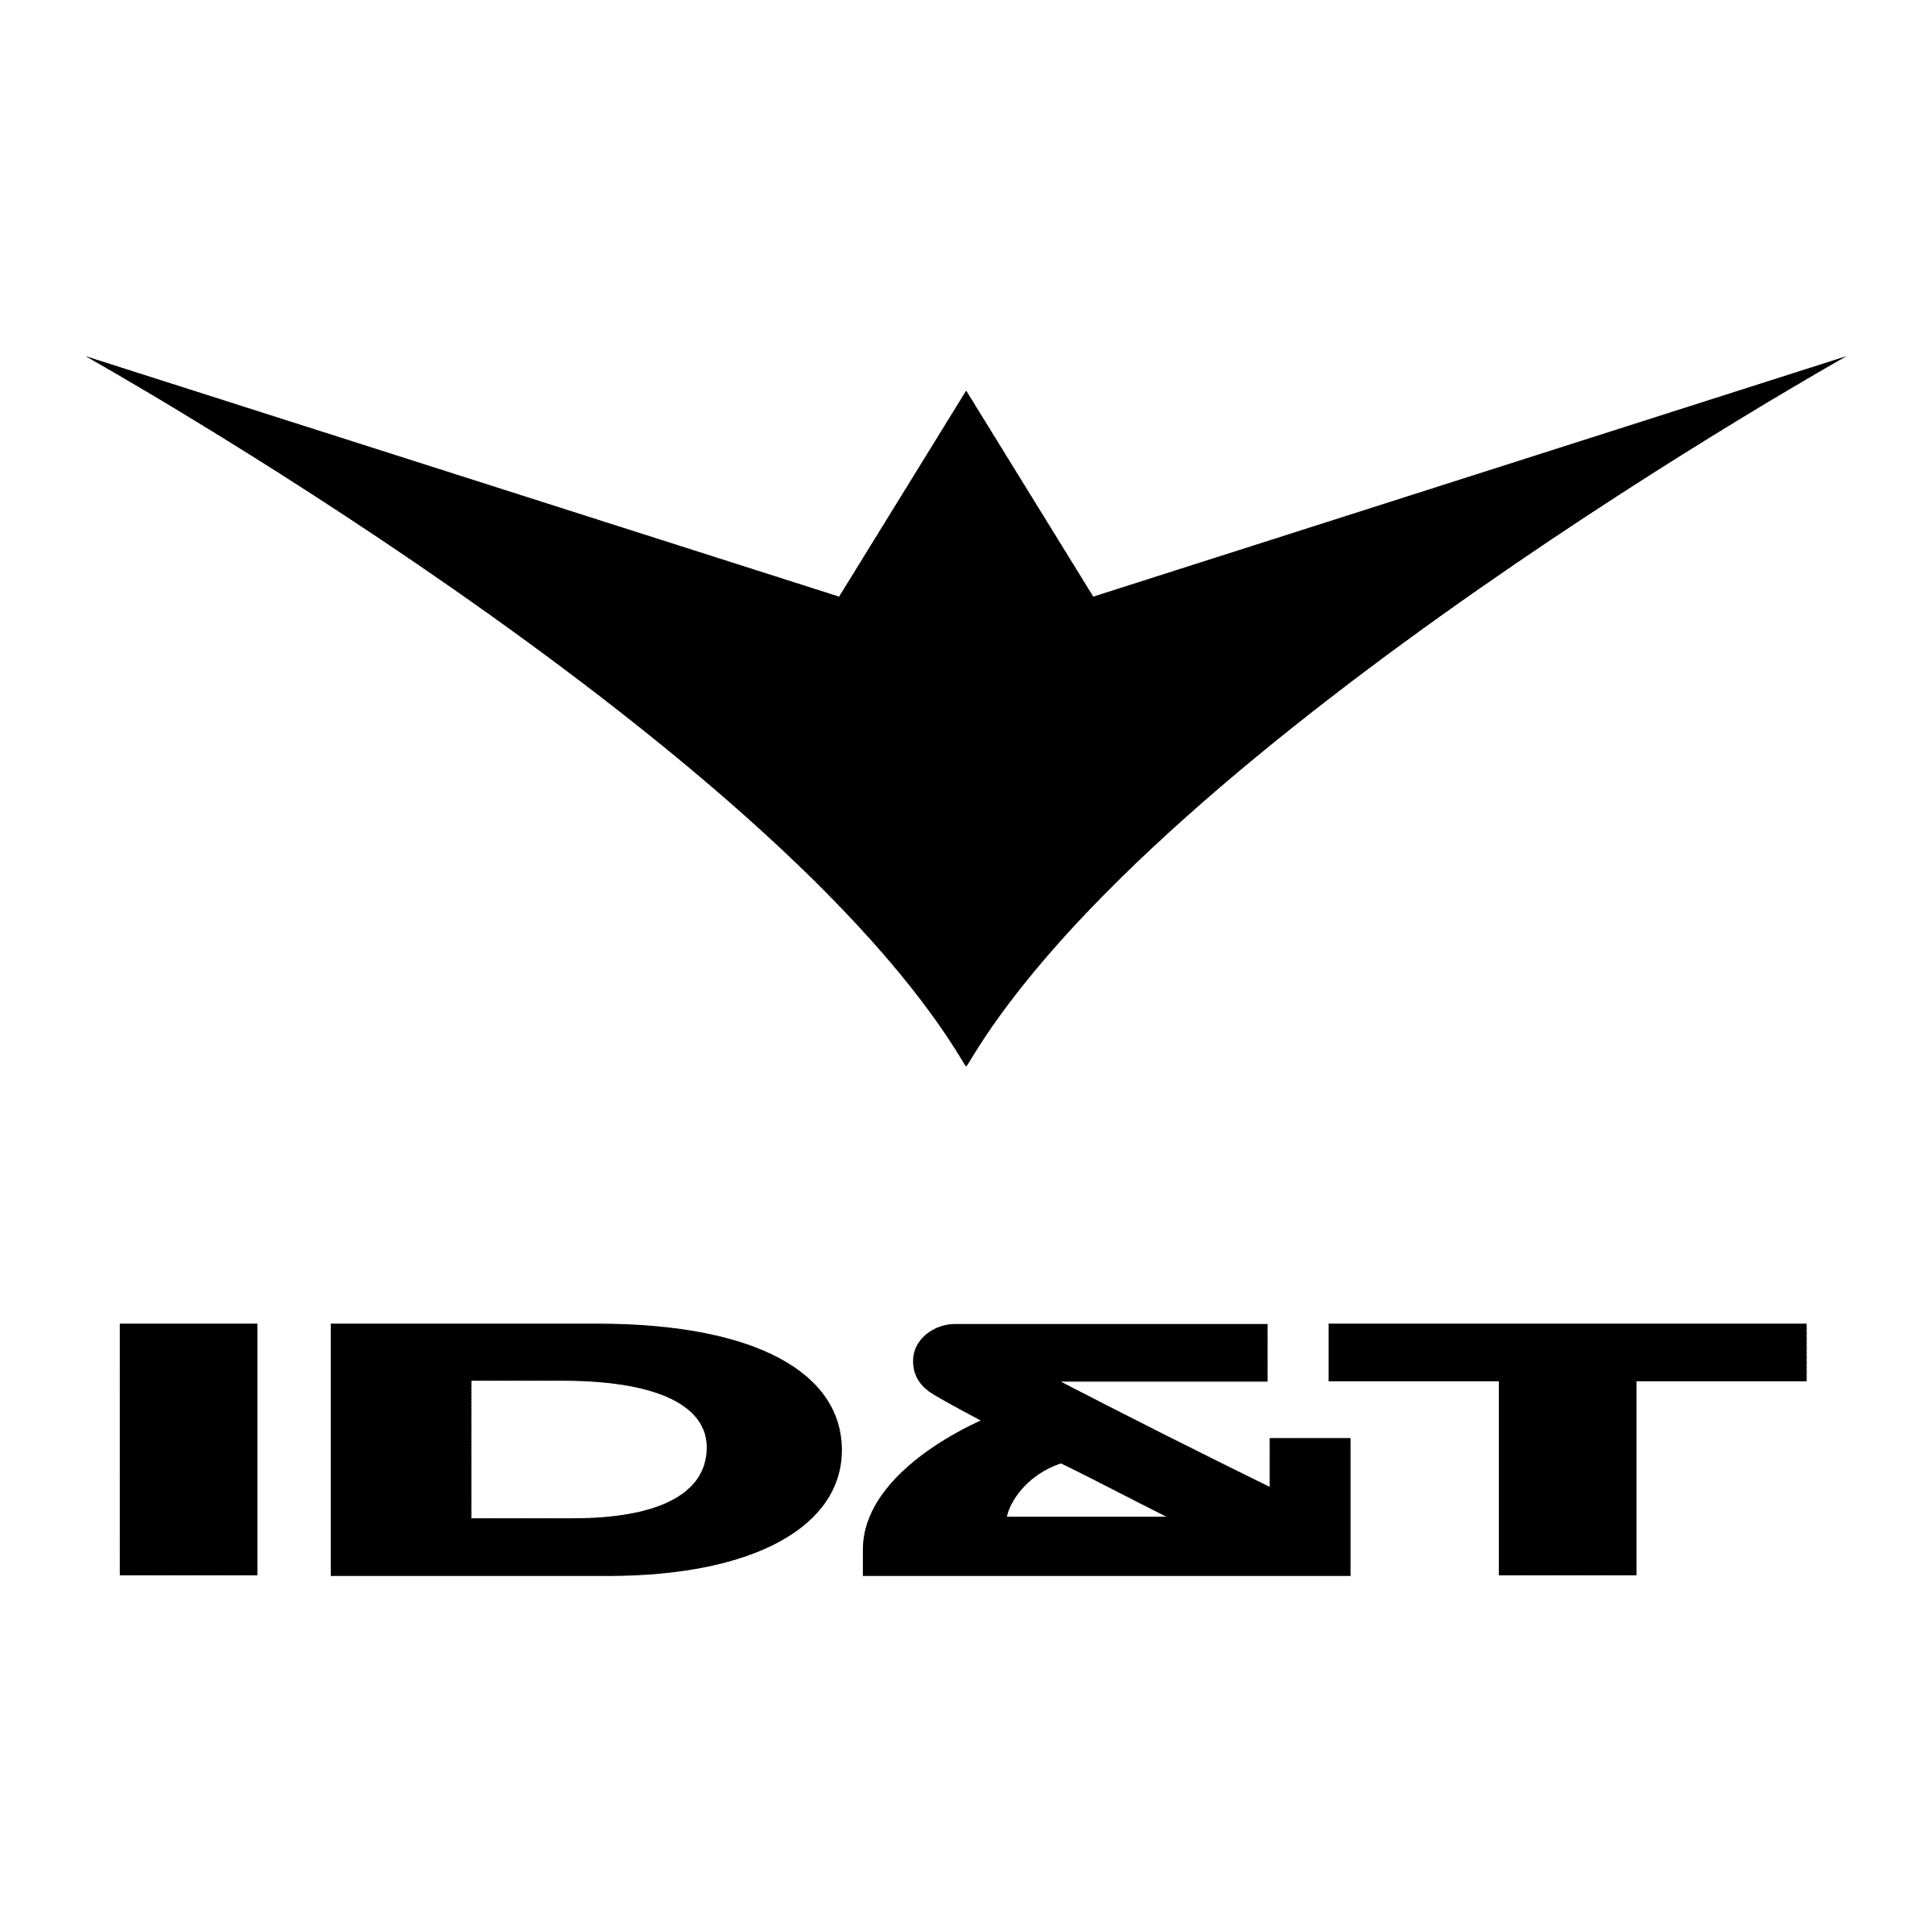 id-t-2-logo-png-transparent.png